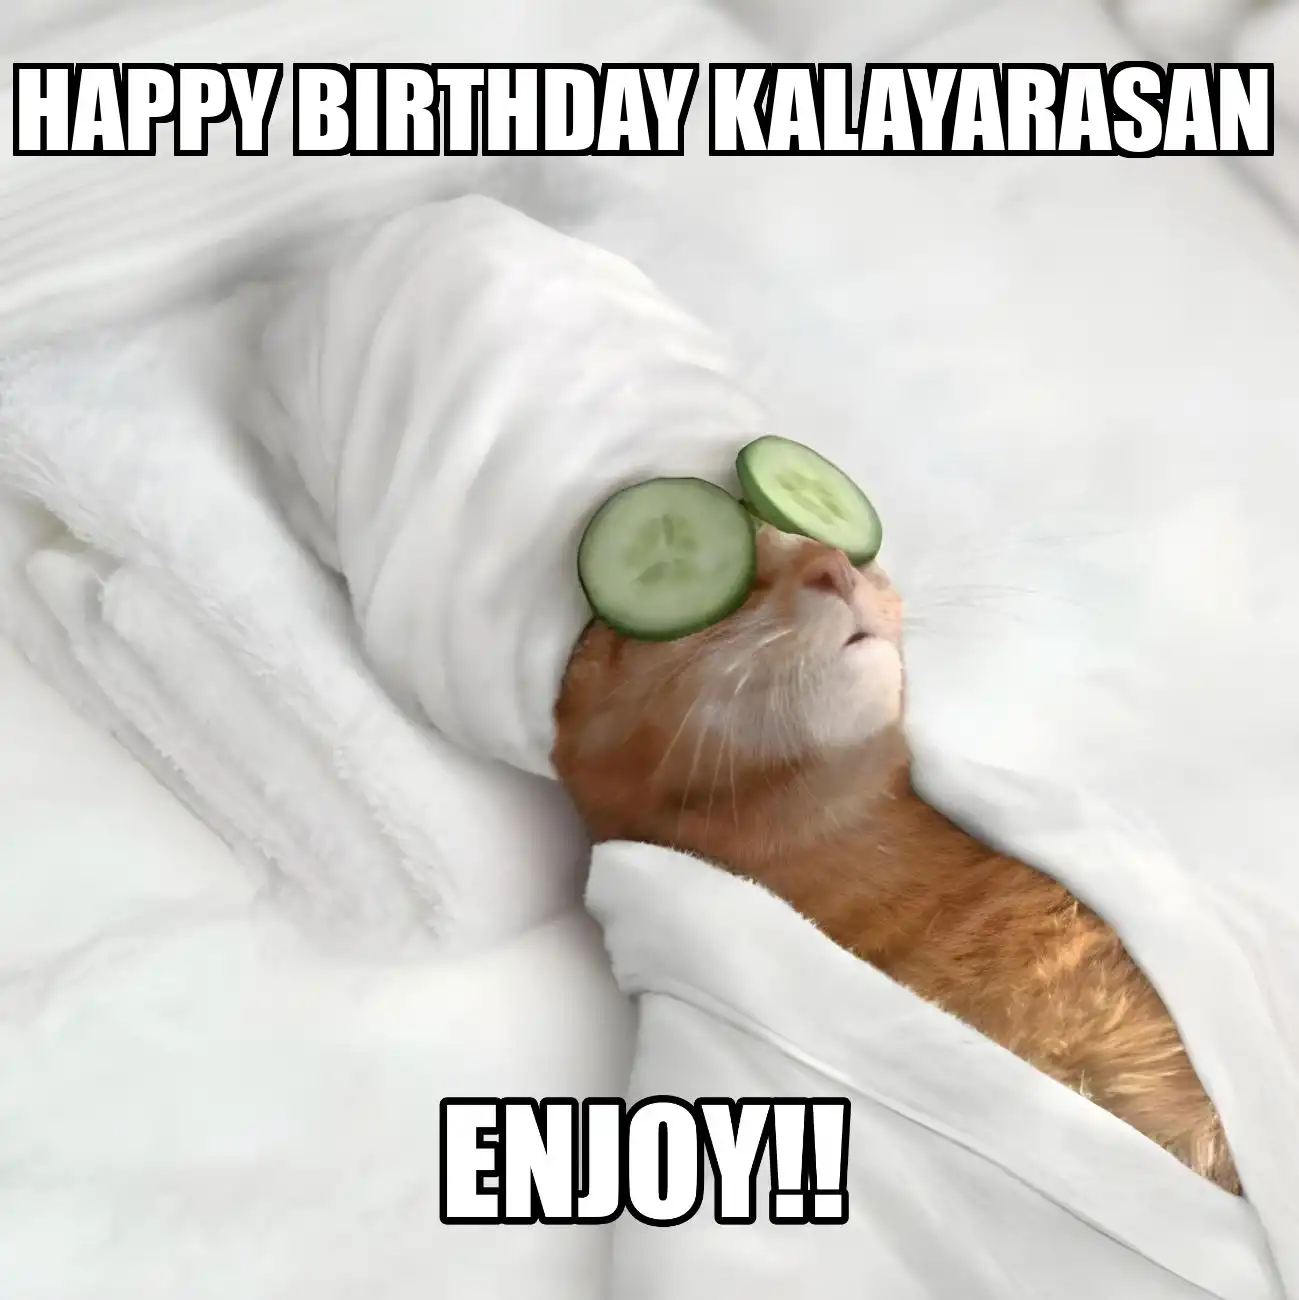 Happy Birthday Kalayarasan Enjoy Cat Meme